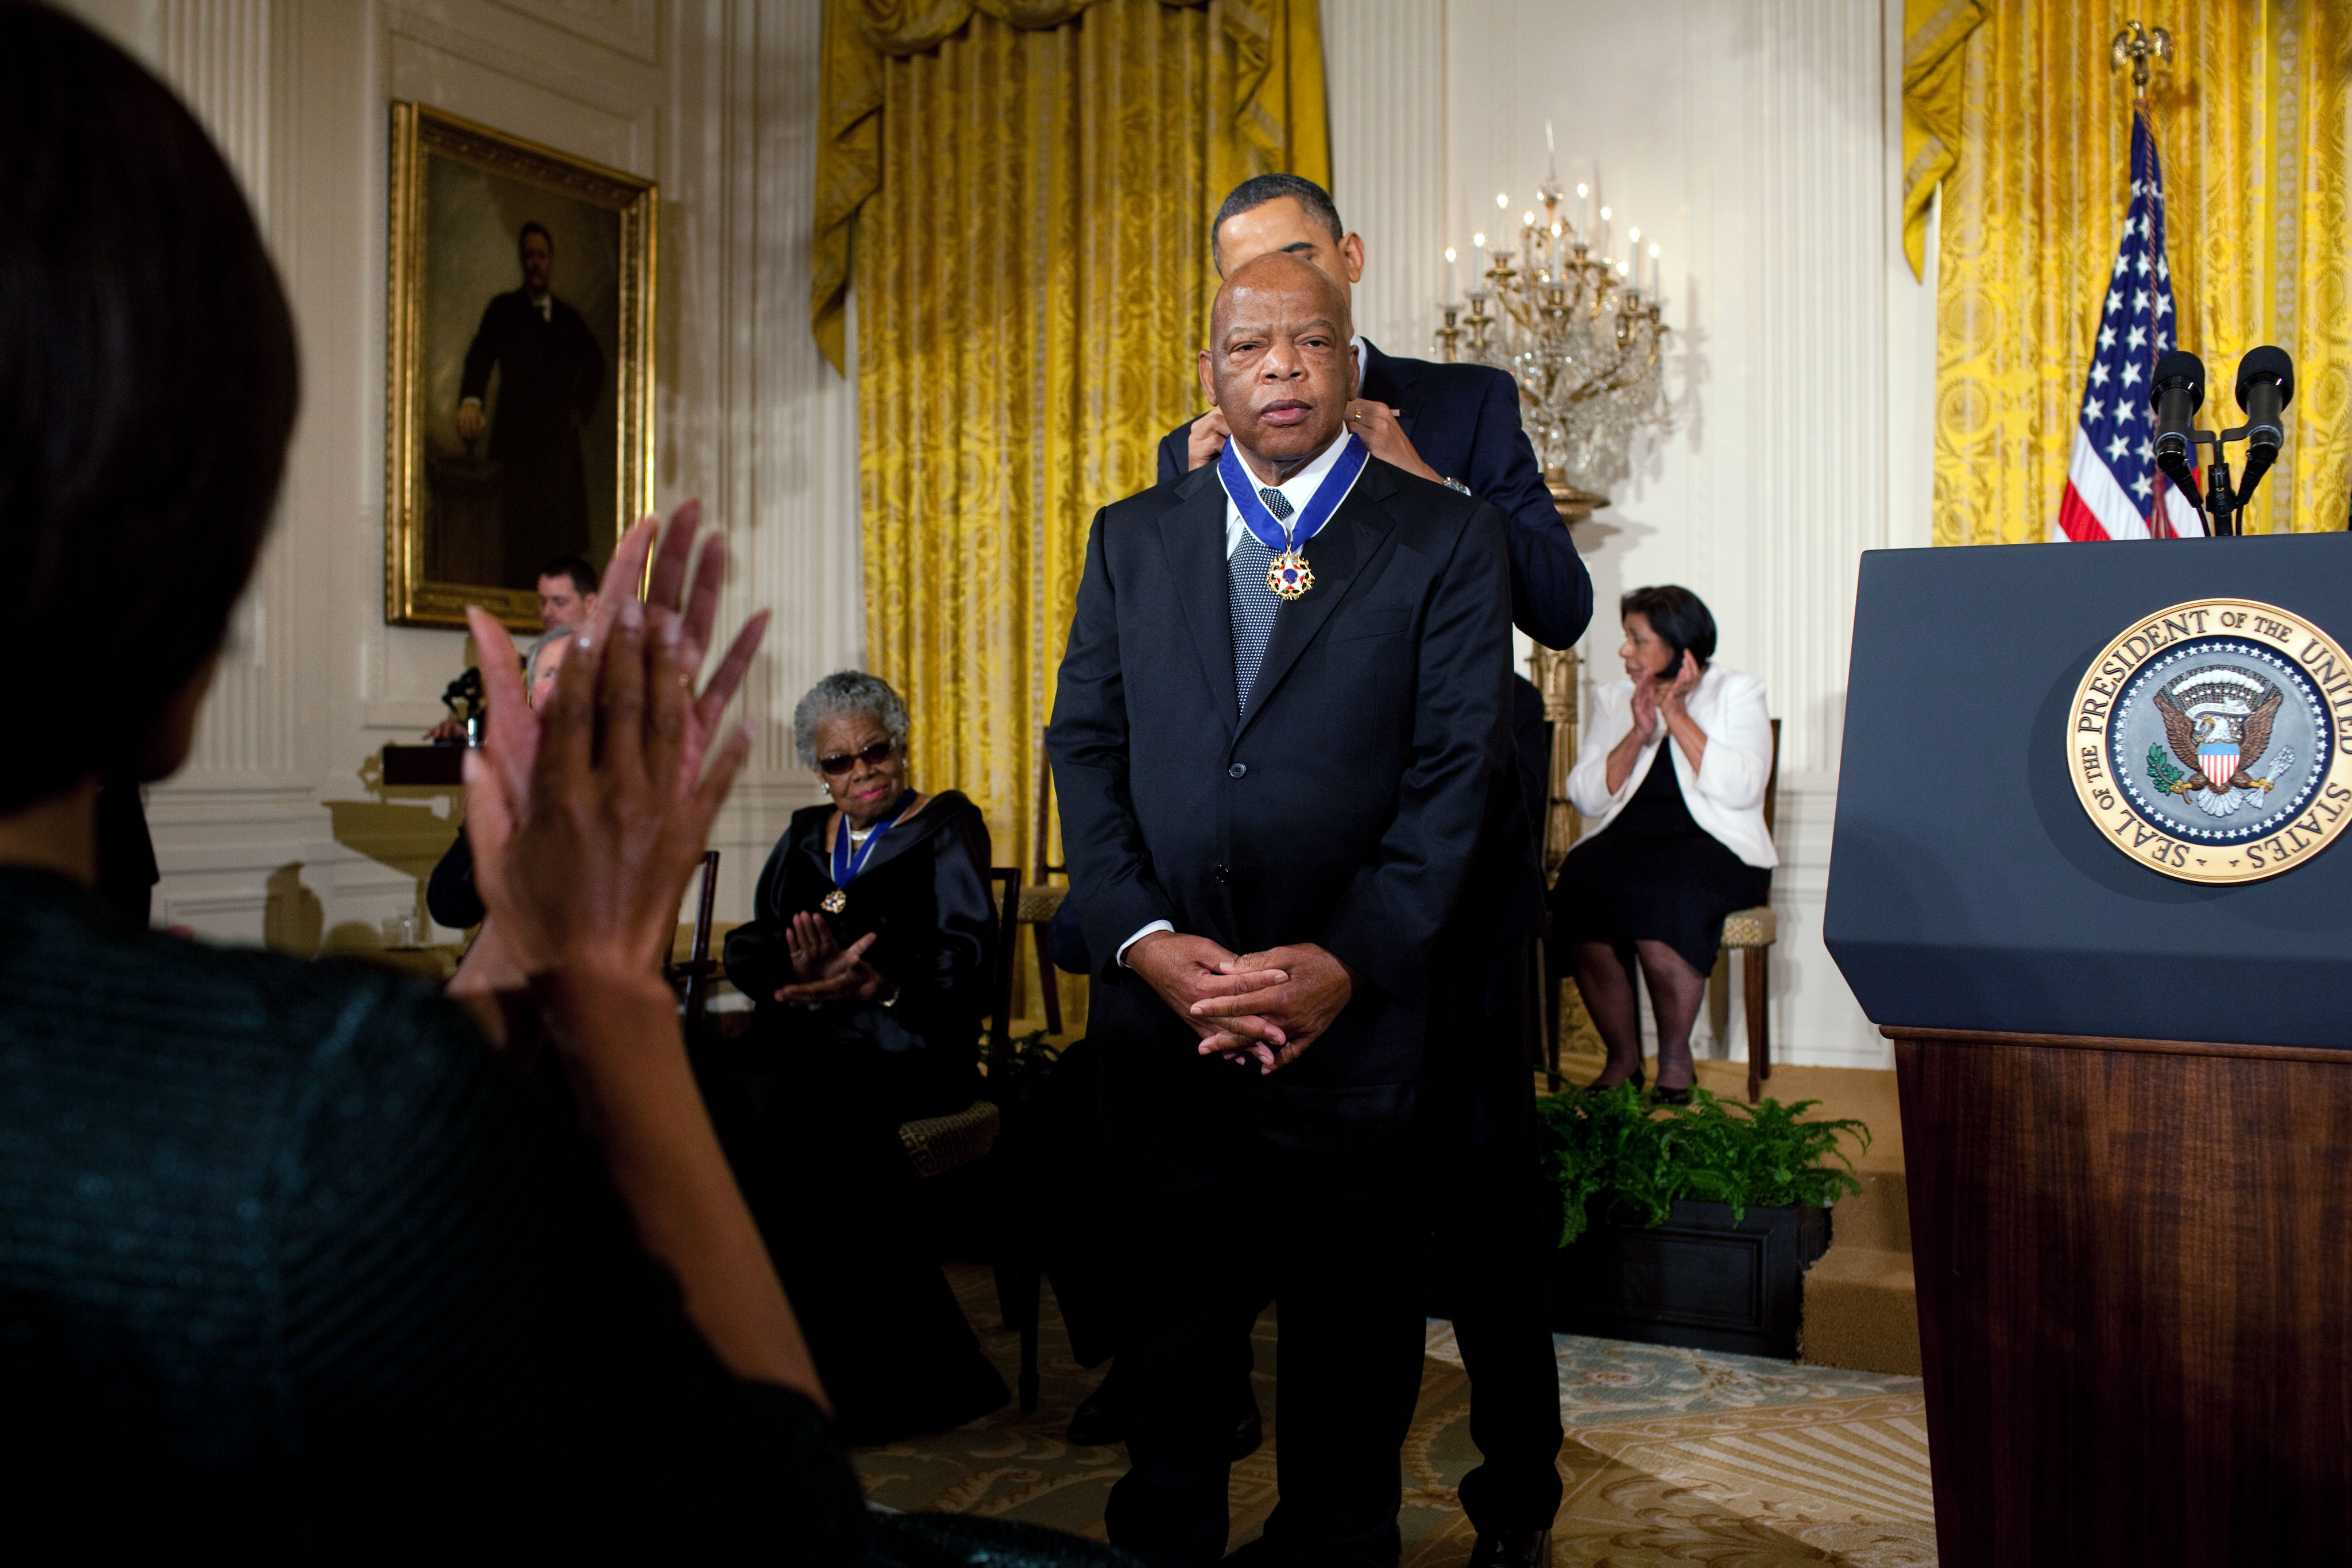 President Barack Obama awards the 2010 Presidential Medal of Freedom to John Lewis